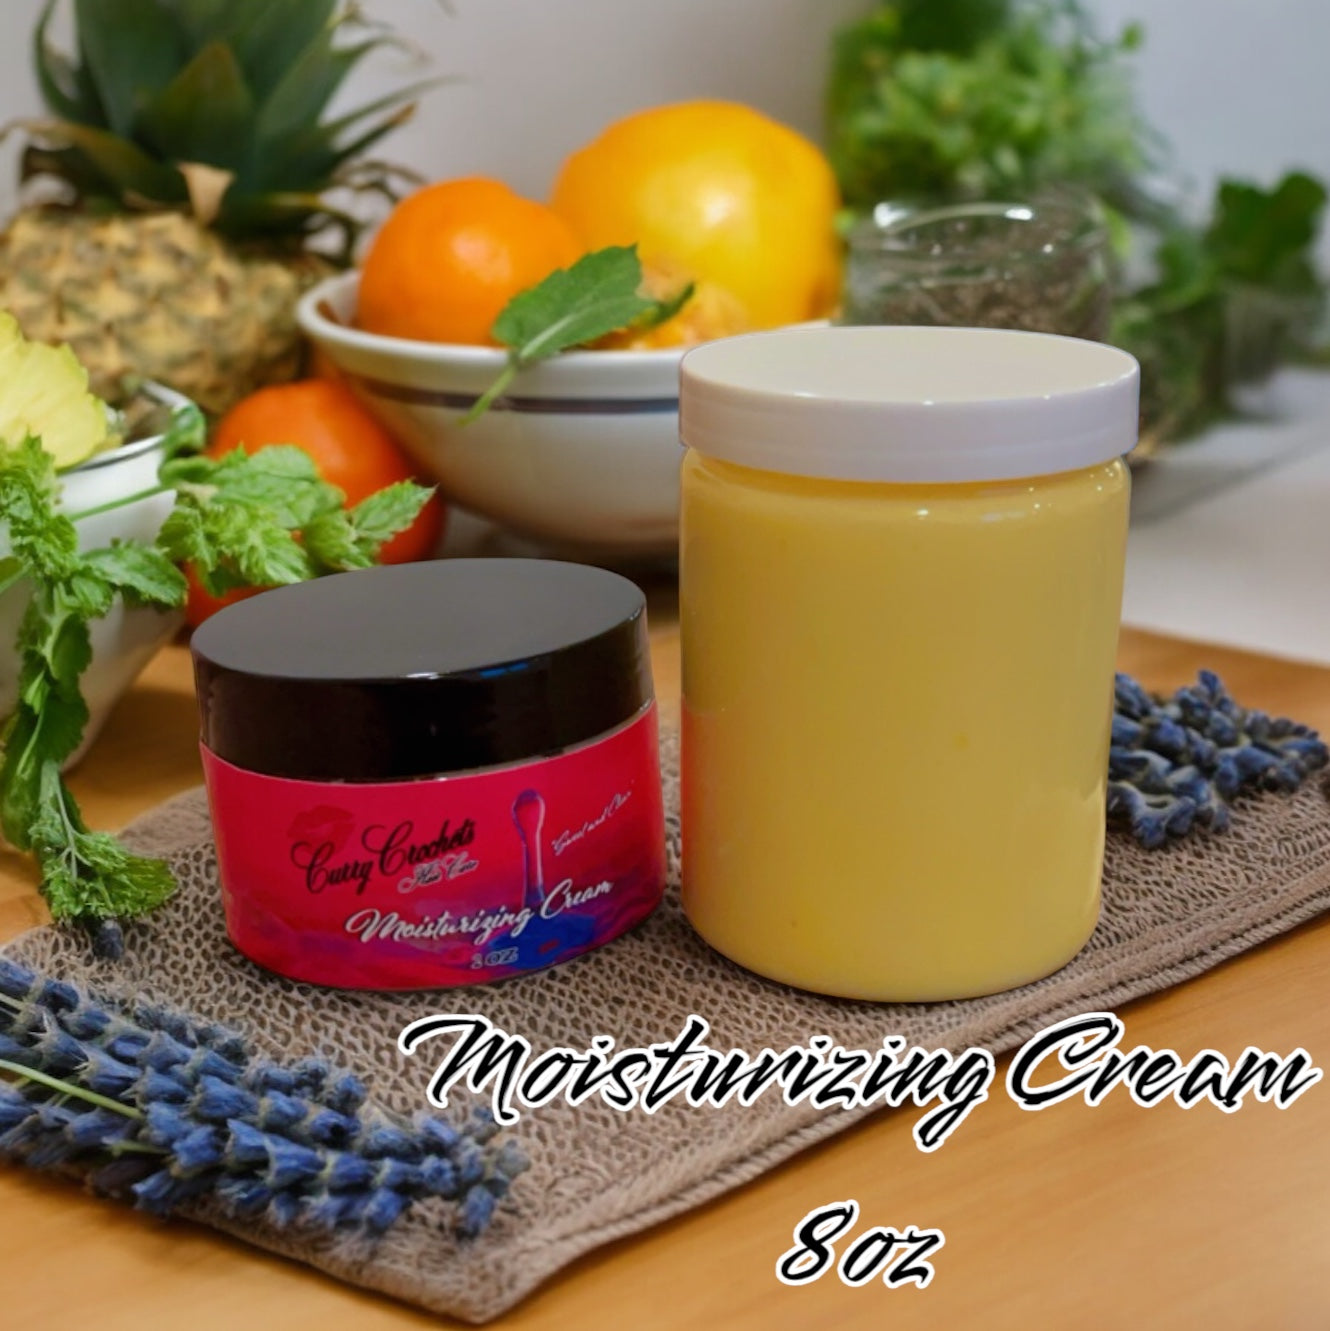 Moisturizing Cream 8oz